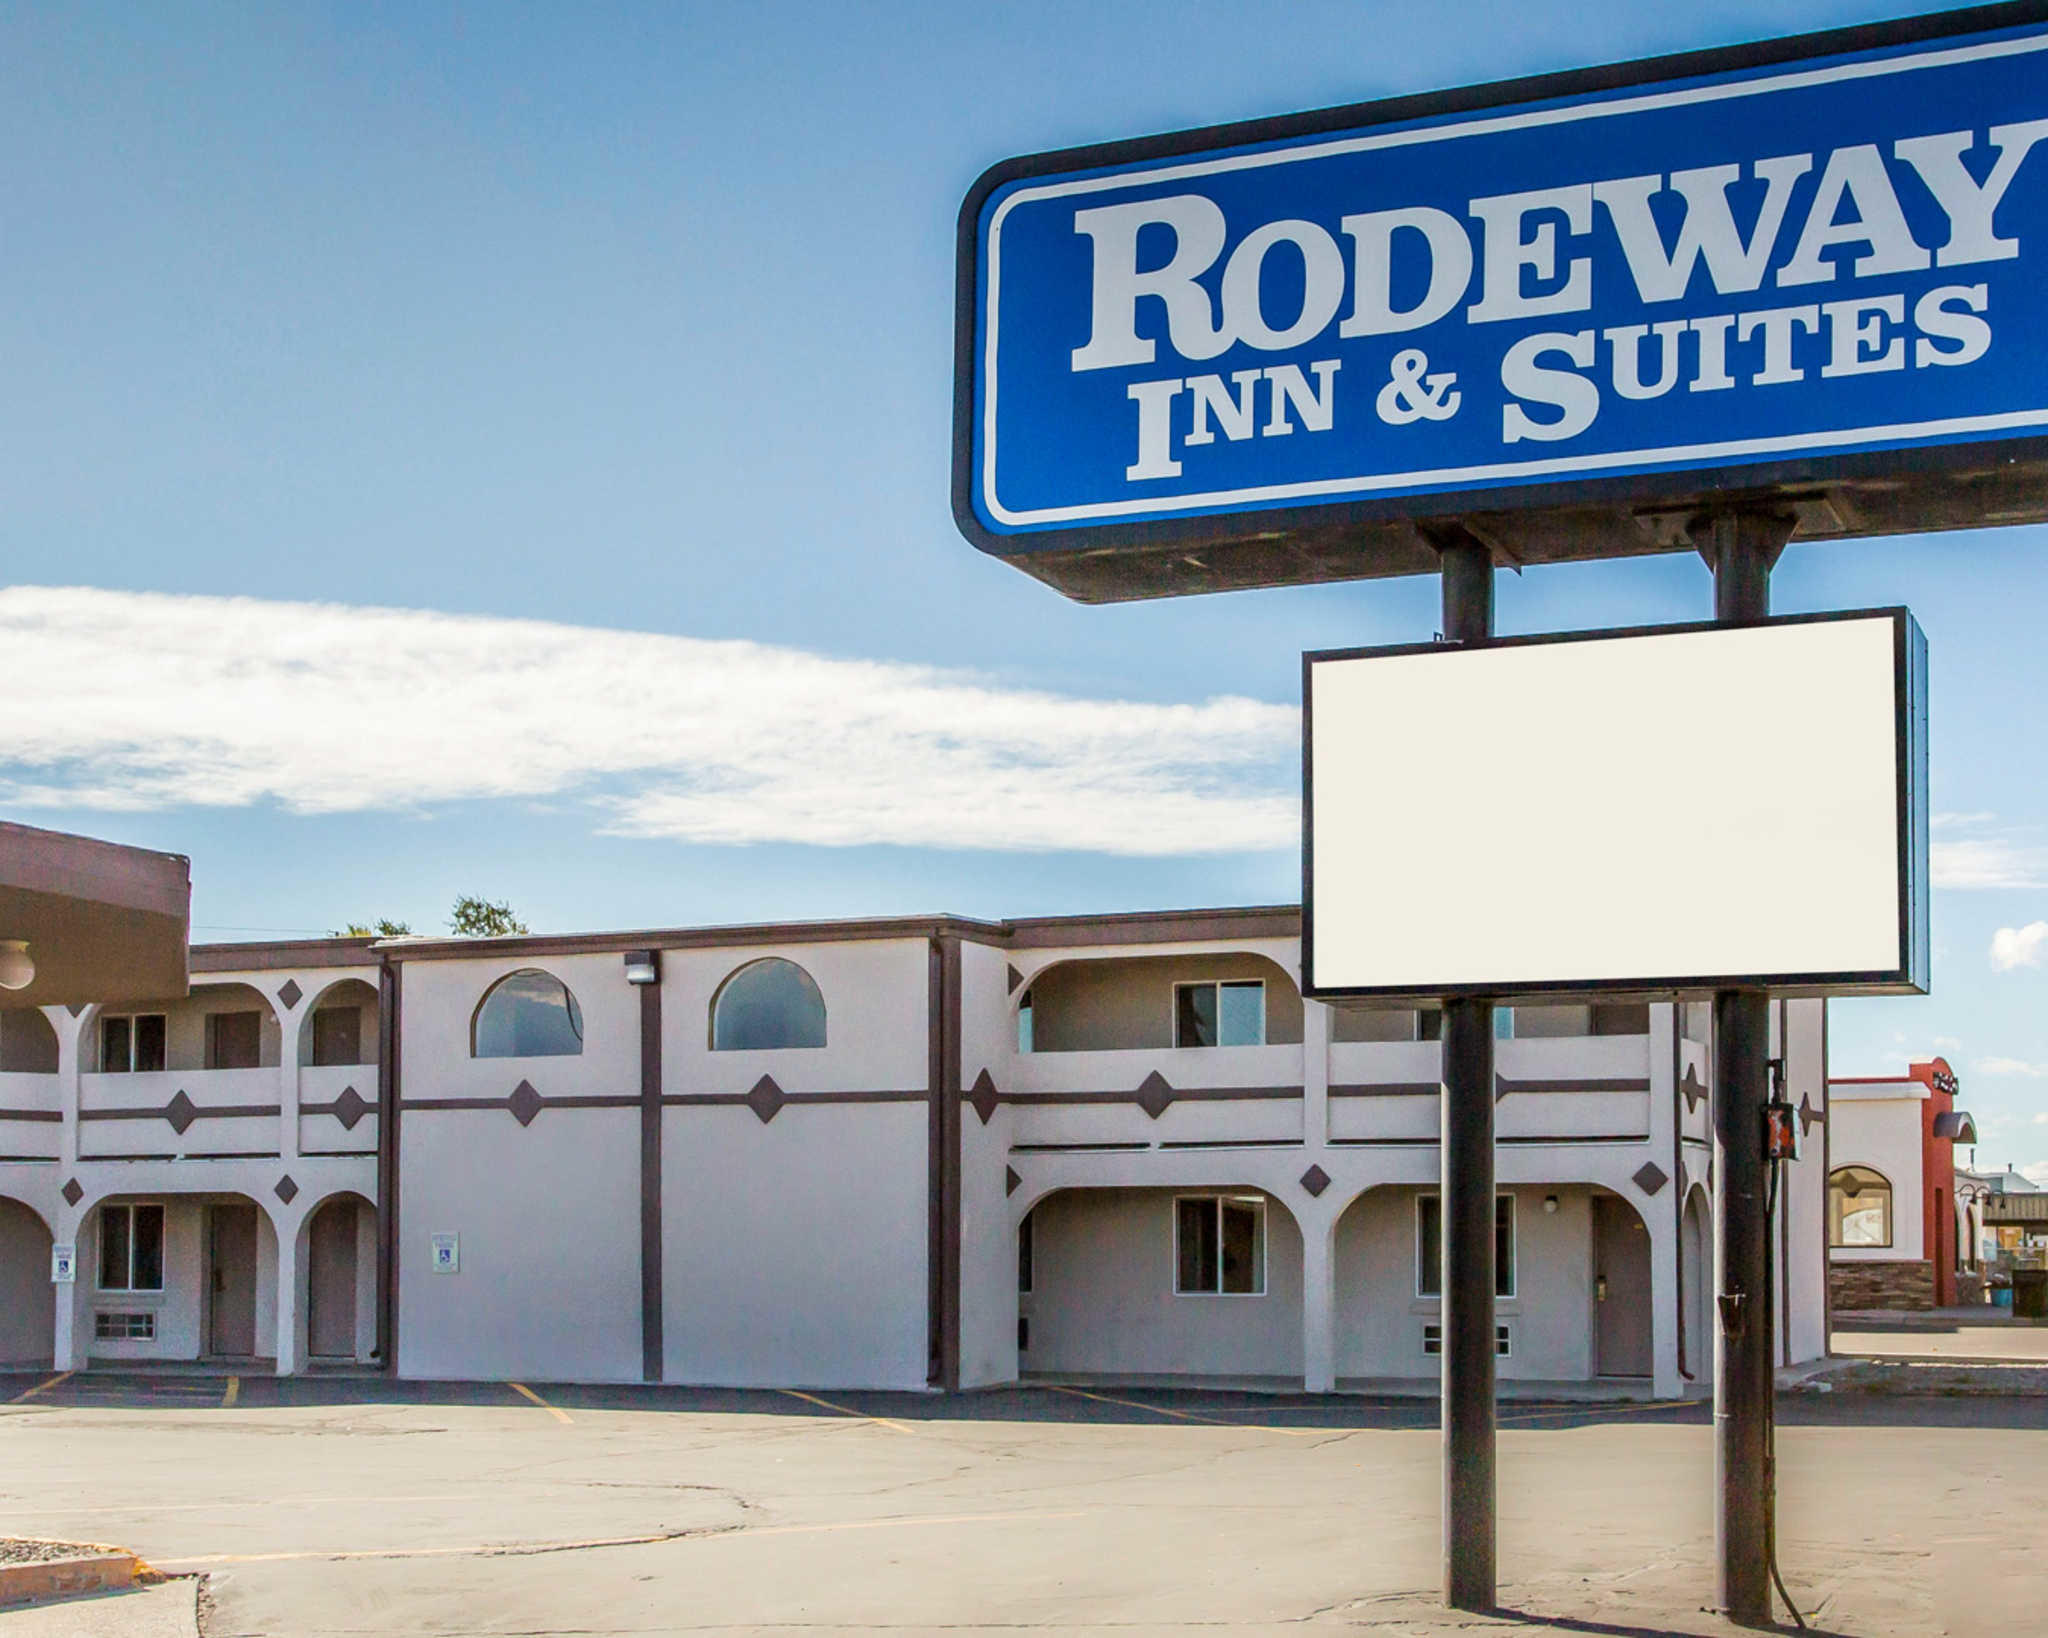 Rodeway Inn & Suites Coupons near me in Riverton | 8coupons